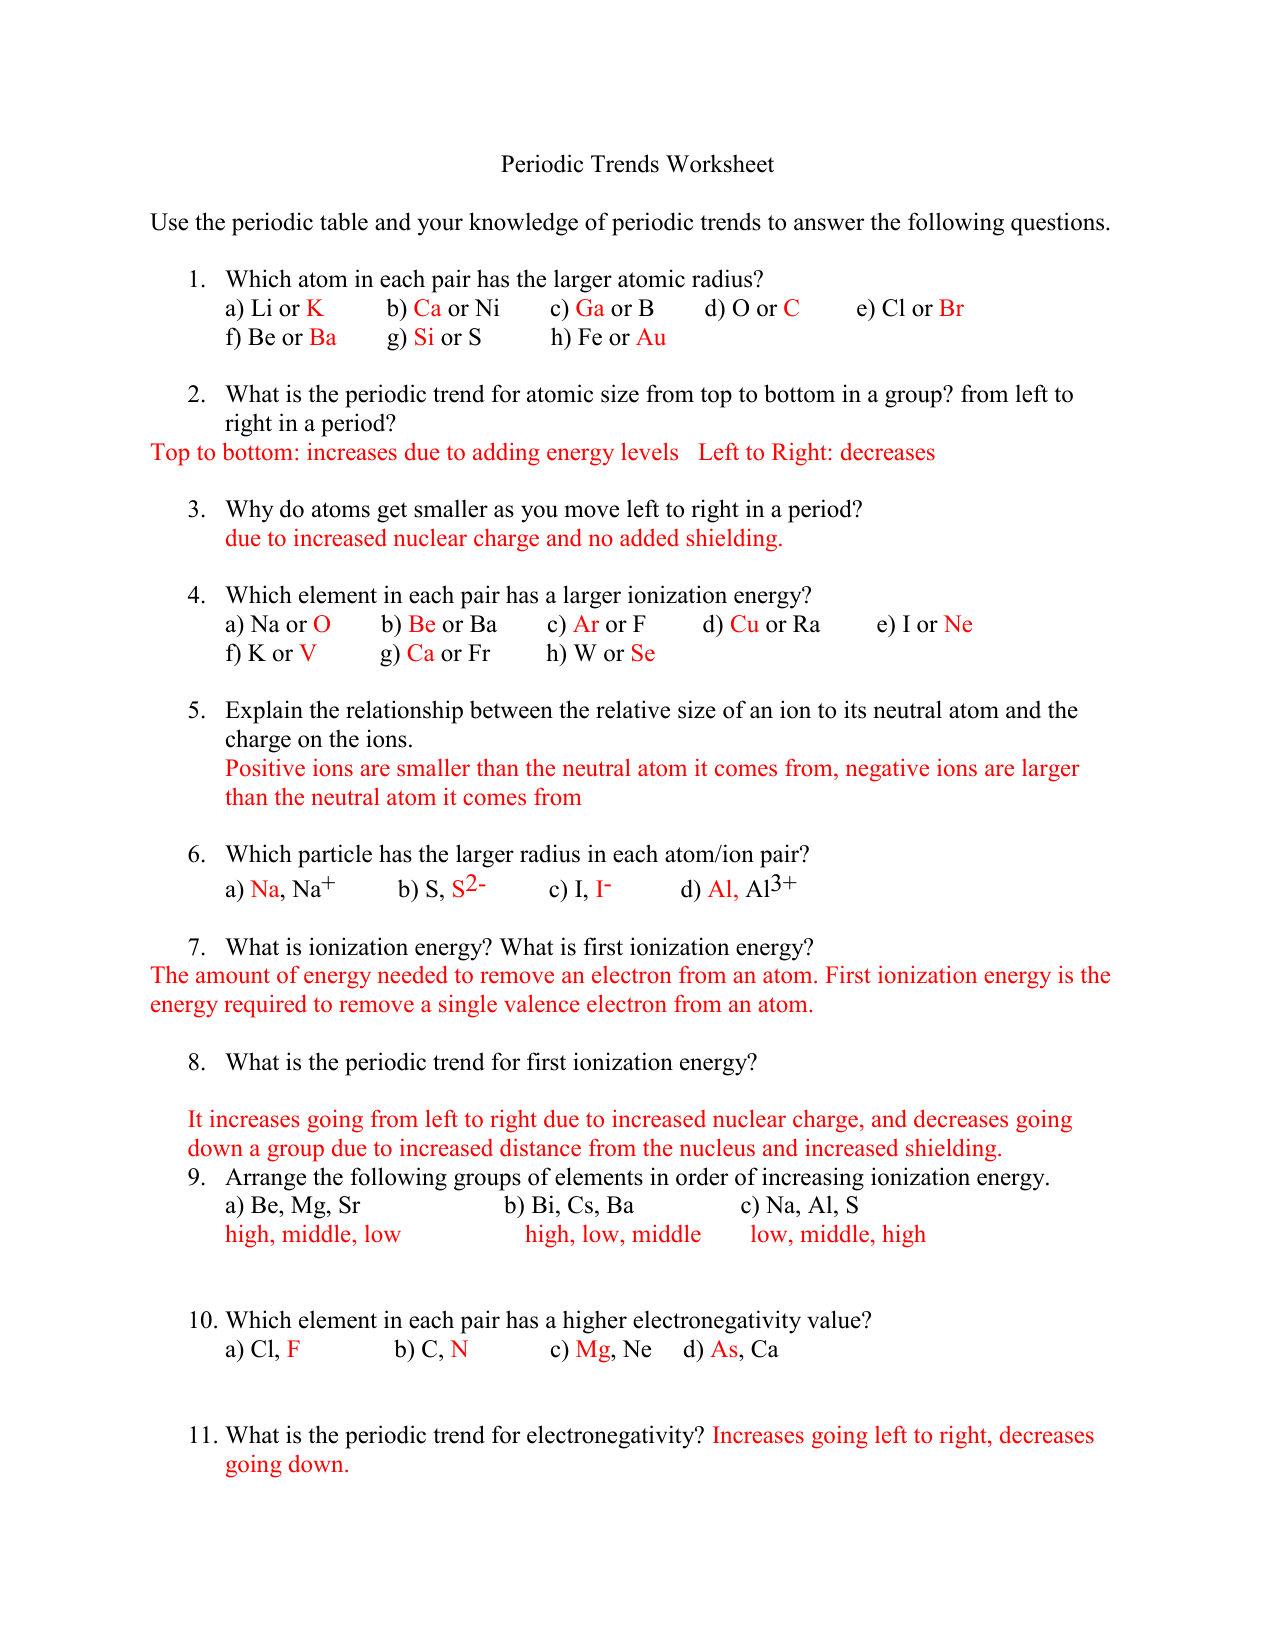 Periodic Trends Worksheet 21 answers Regarding Periodic Trends Worksheet Answer Key